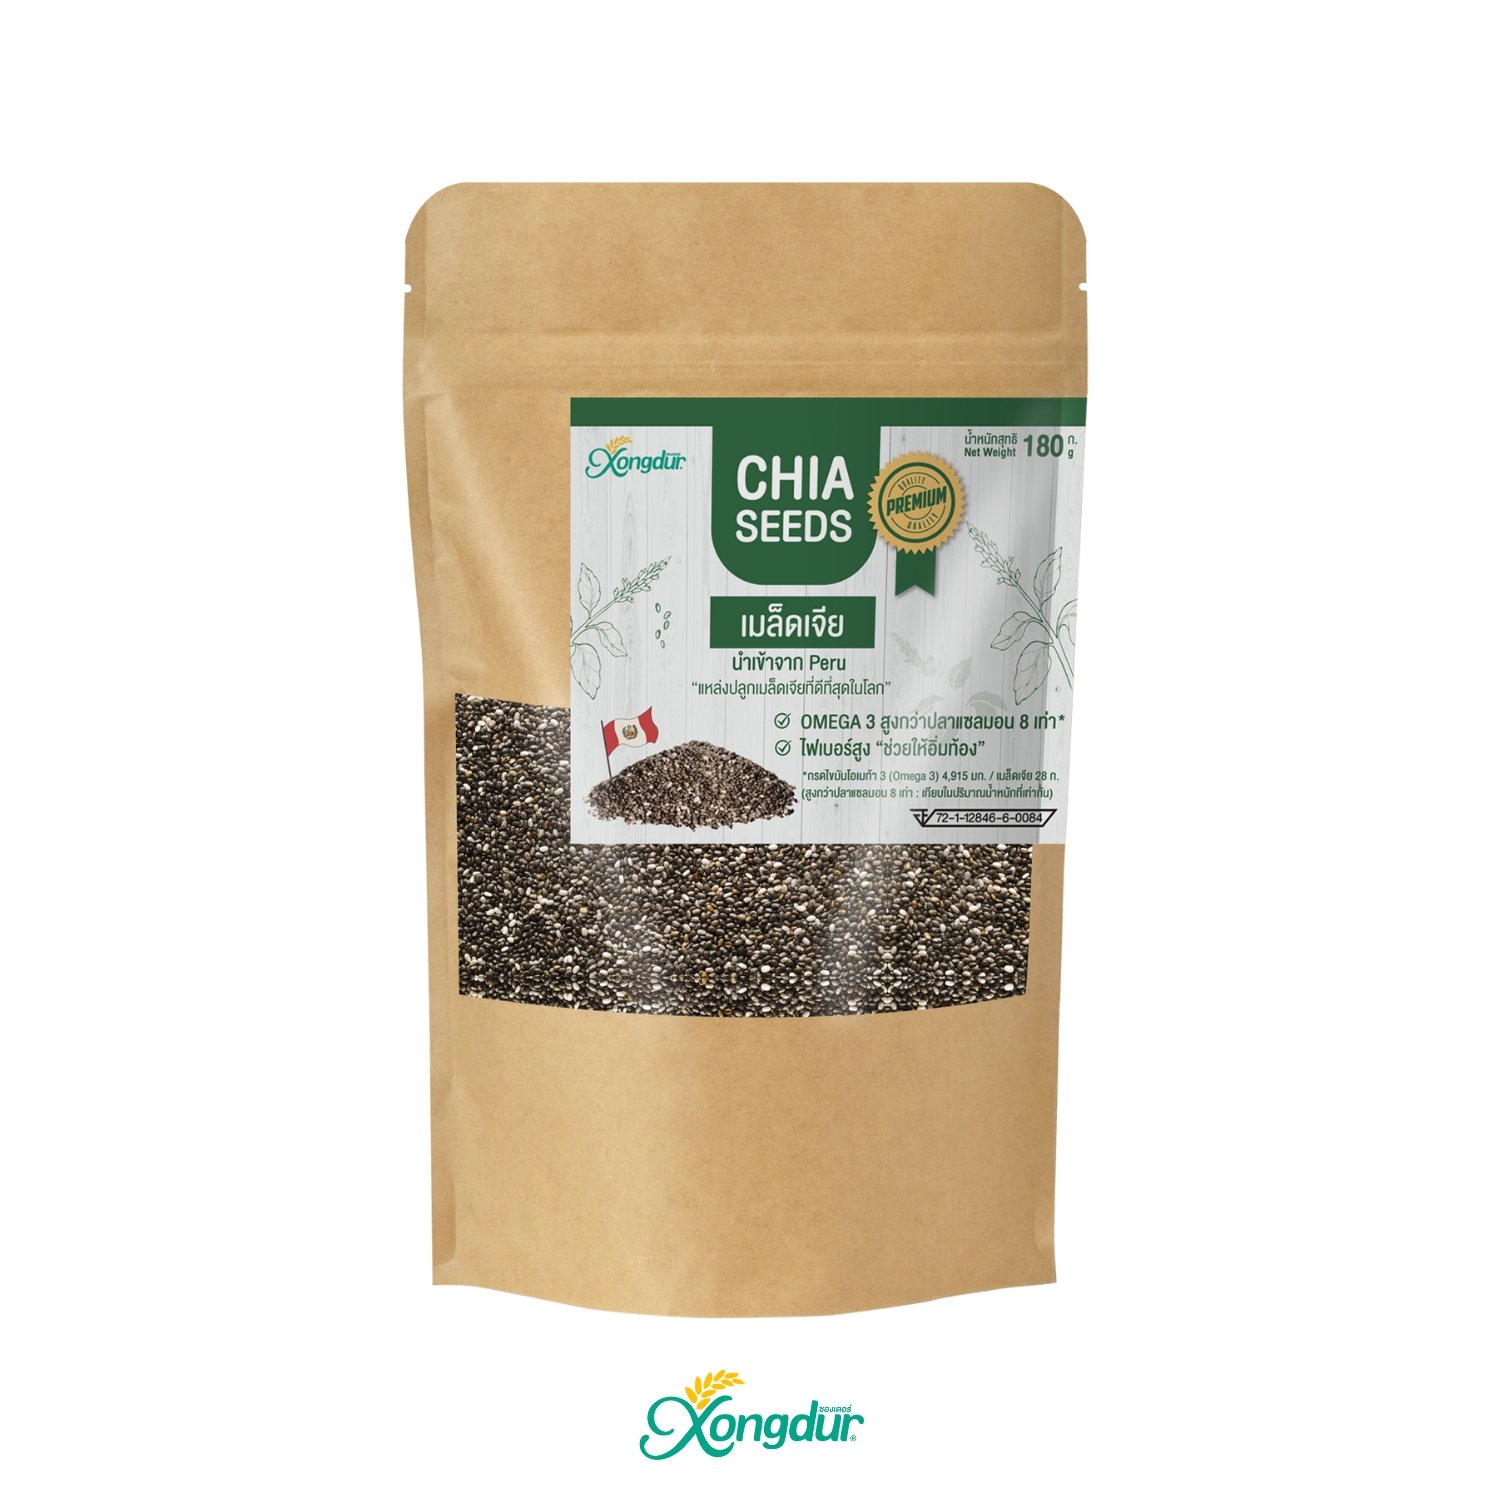 Chia Seeds (Xongdur Brand)